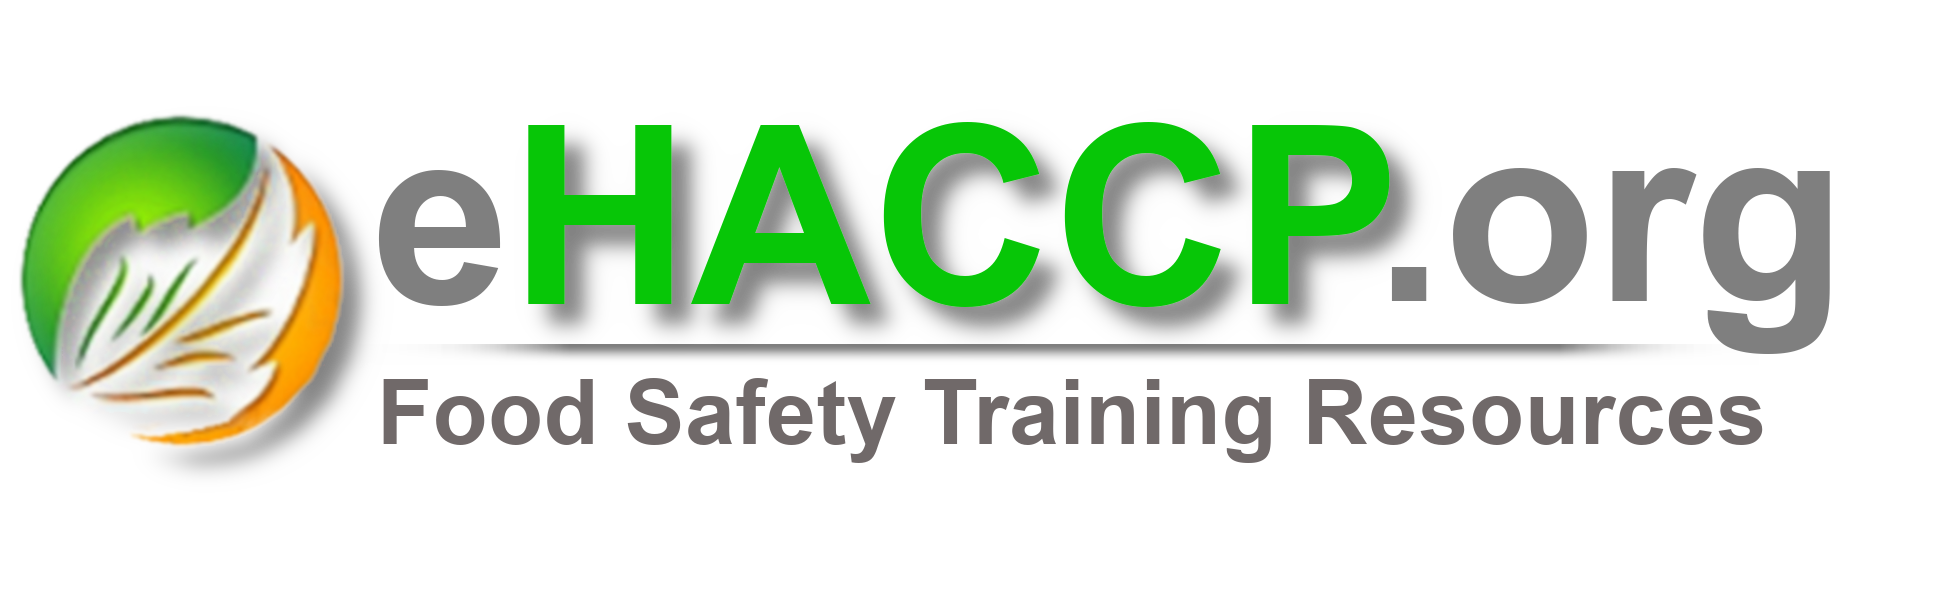 HACCP Training and HACCP Certification